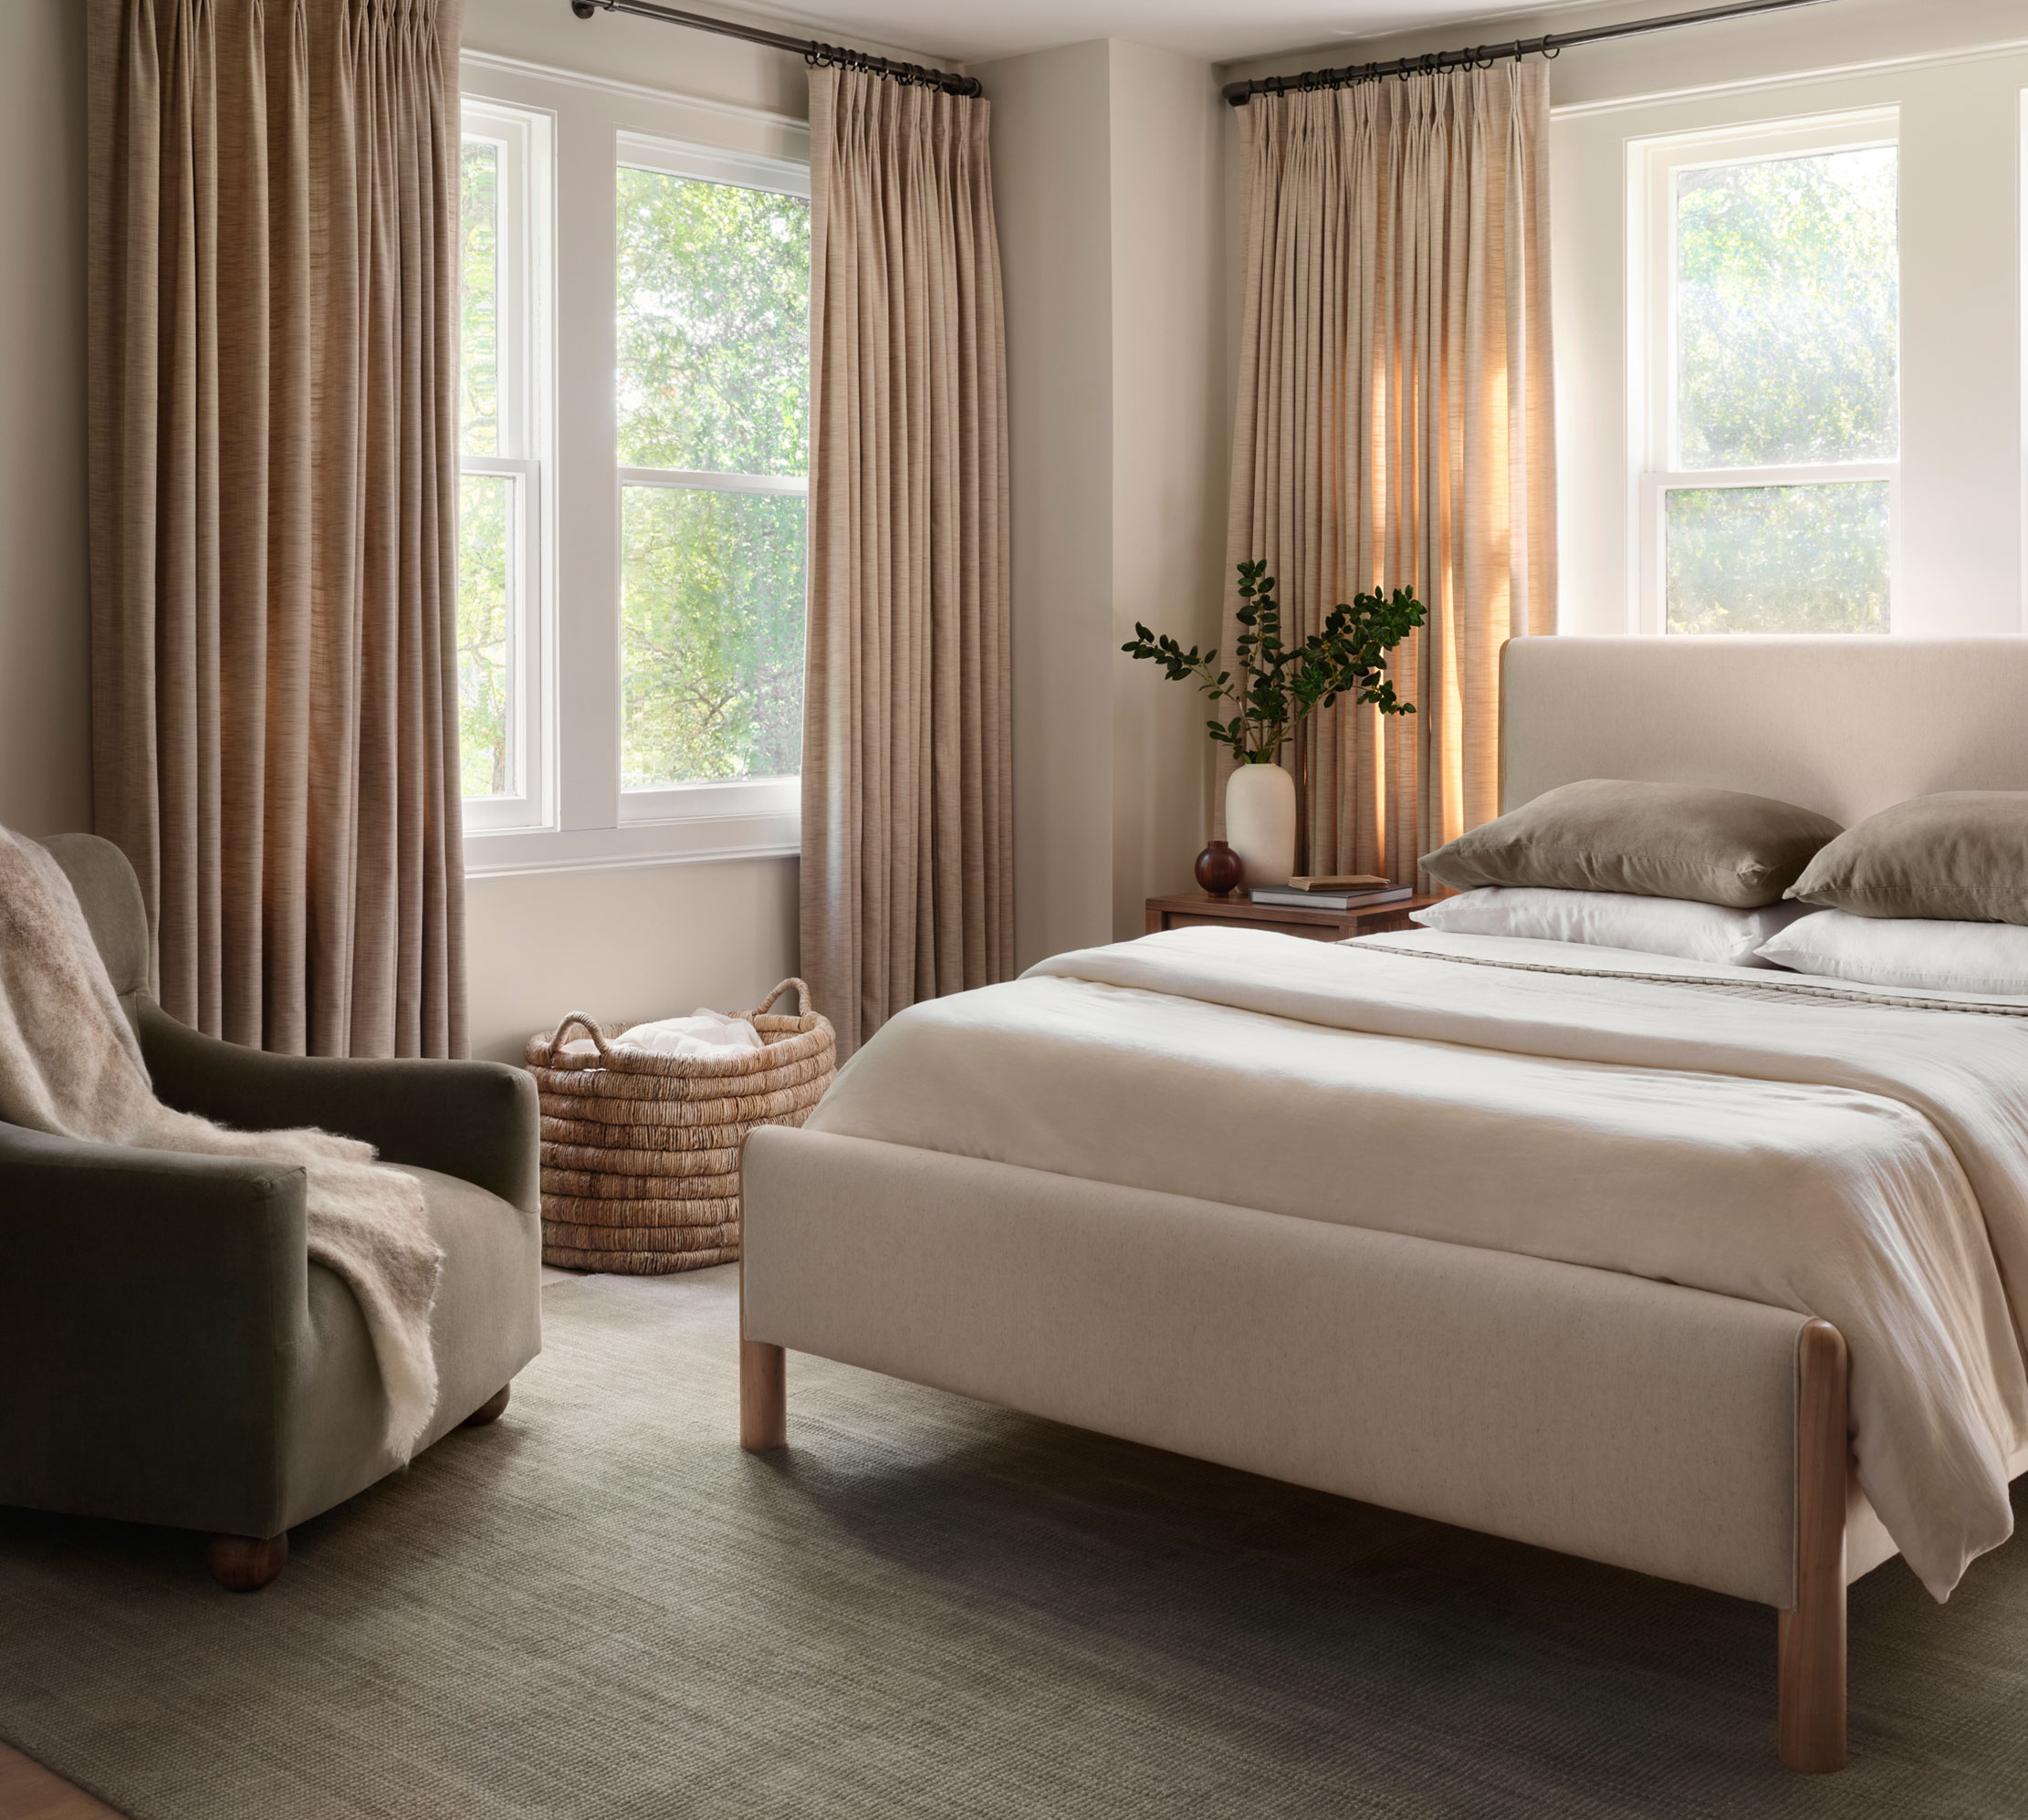 30 Best Bedroom Area Rugs - Great Ideas for Bedroom Rugs